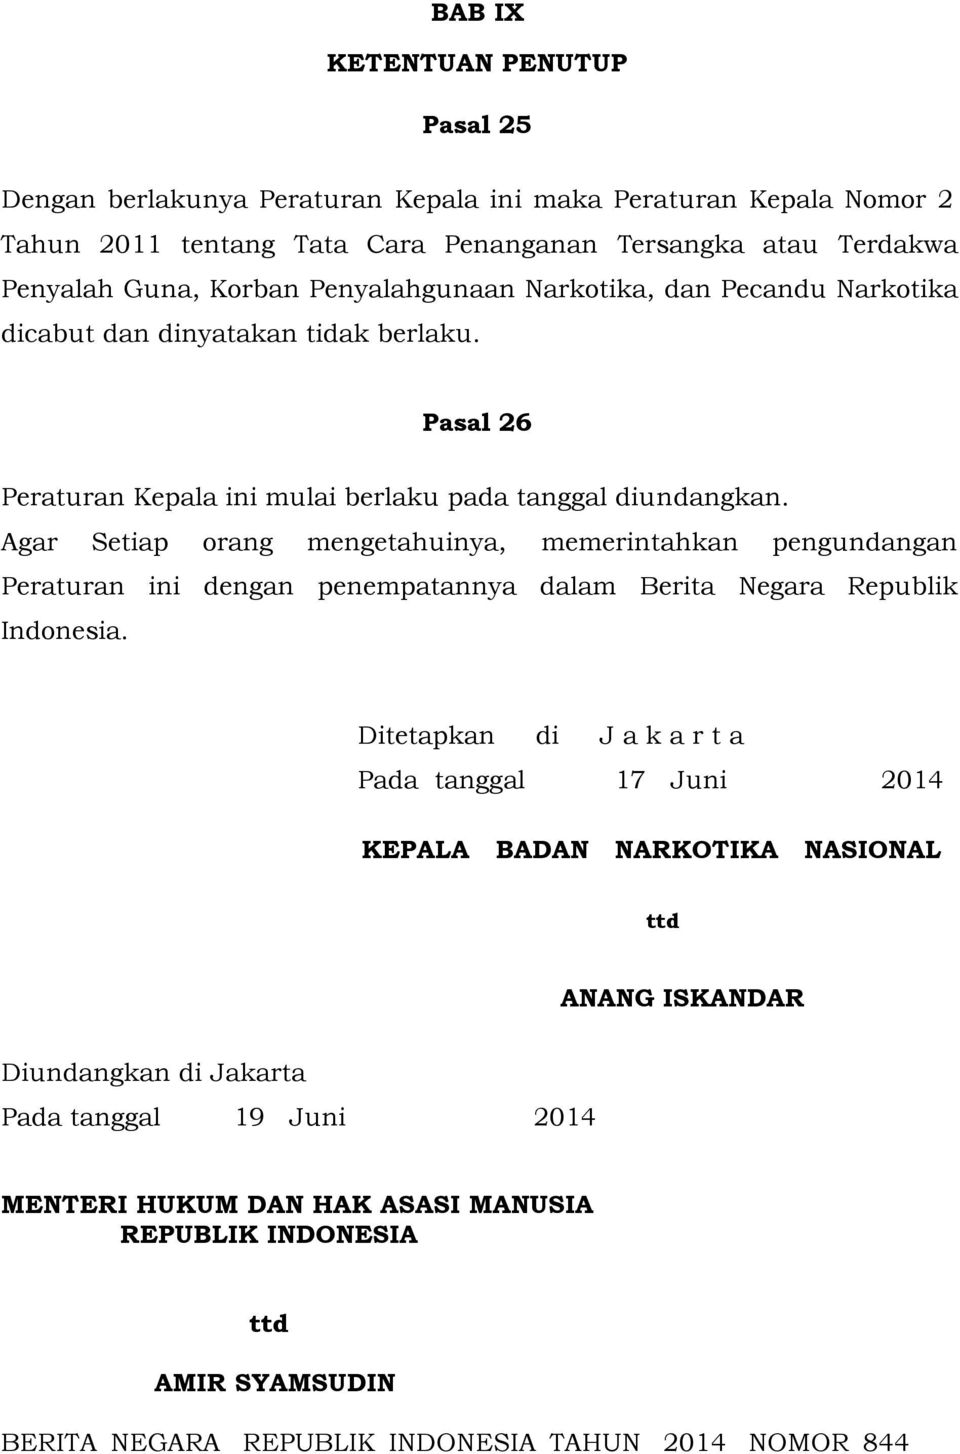 Agar Setiap orang mengetahuinya, memerintahkan pengundangan Peraturan ini dengan penempatannya dalam Berita Negara Republik Indonesia.